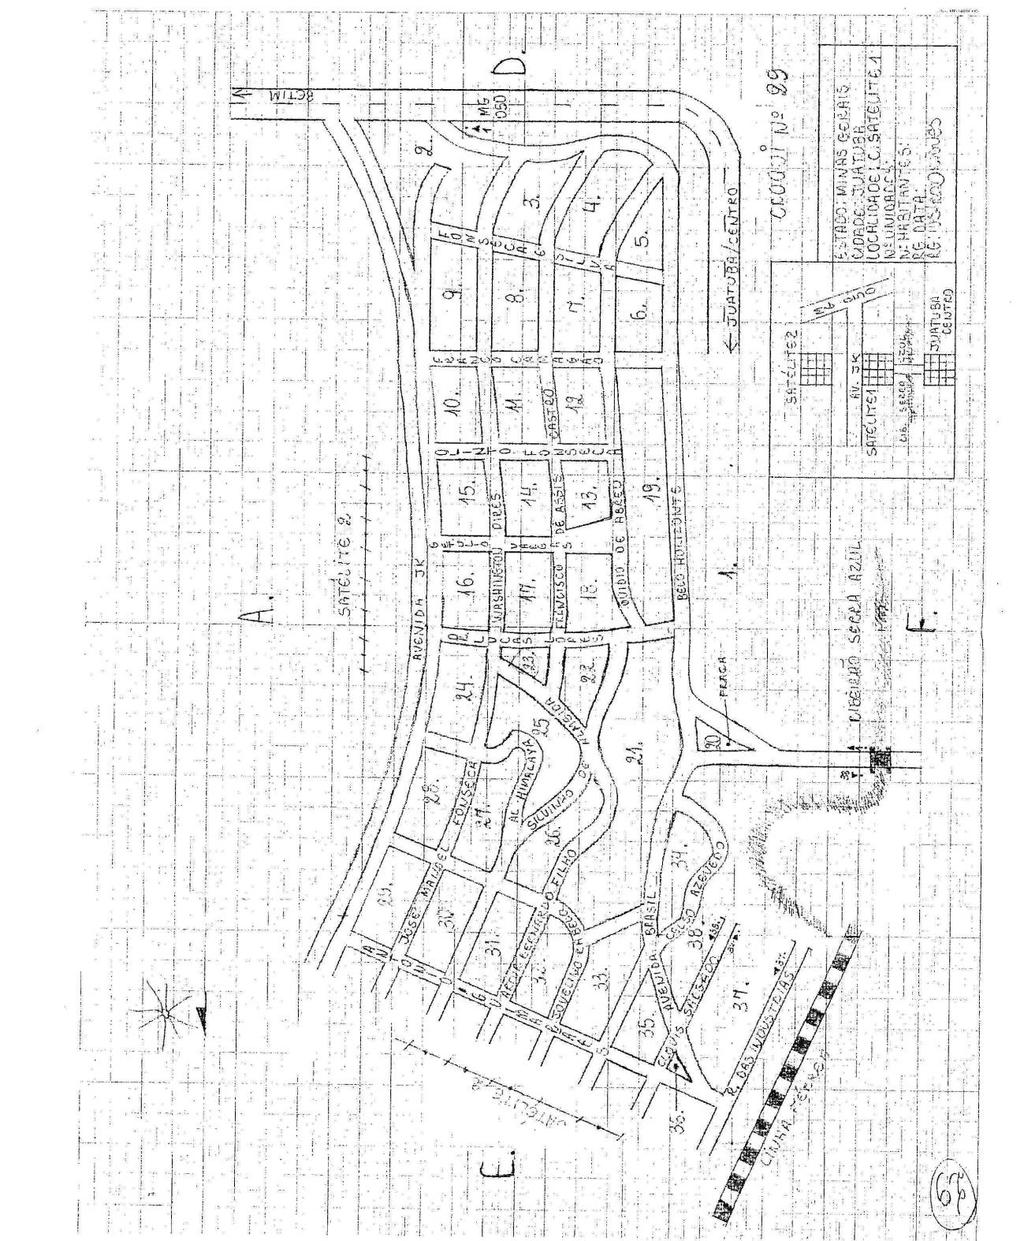 Anexo 6: Mapa do bairro Satélite II, integrante da Área Experimental do estudo, município